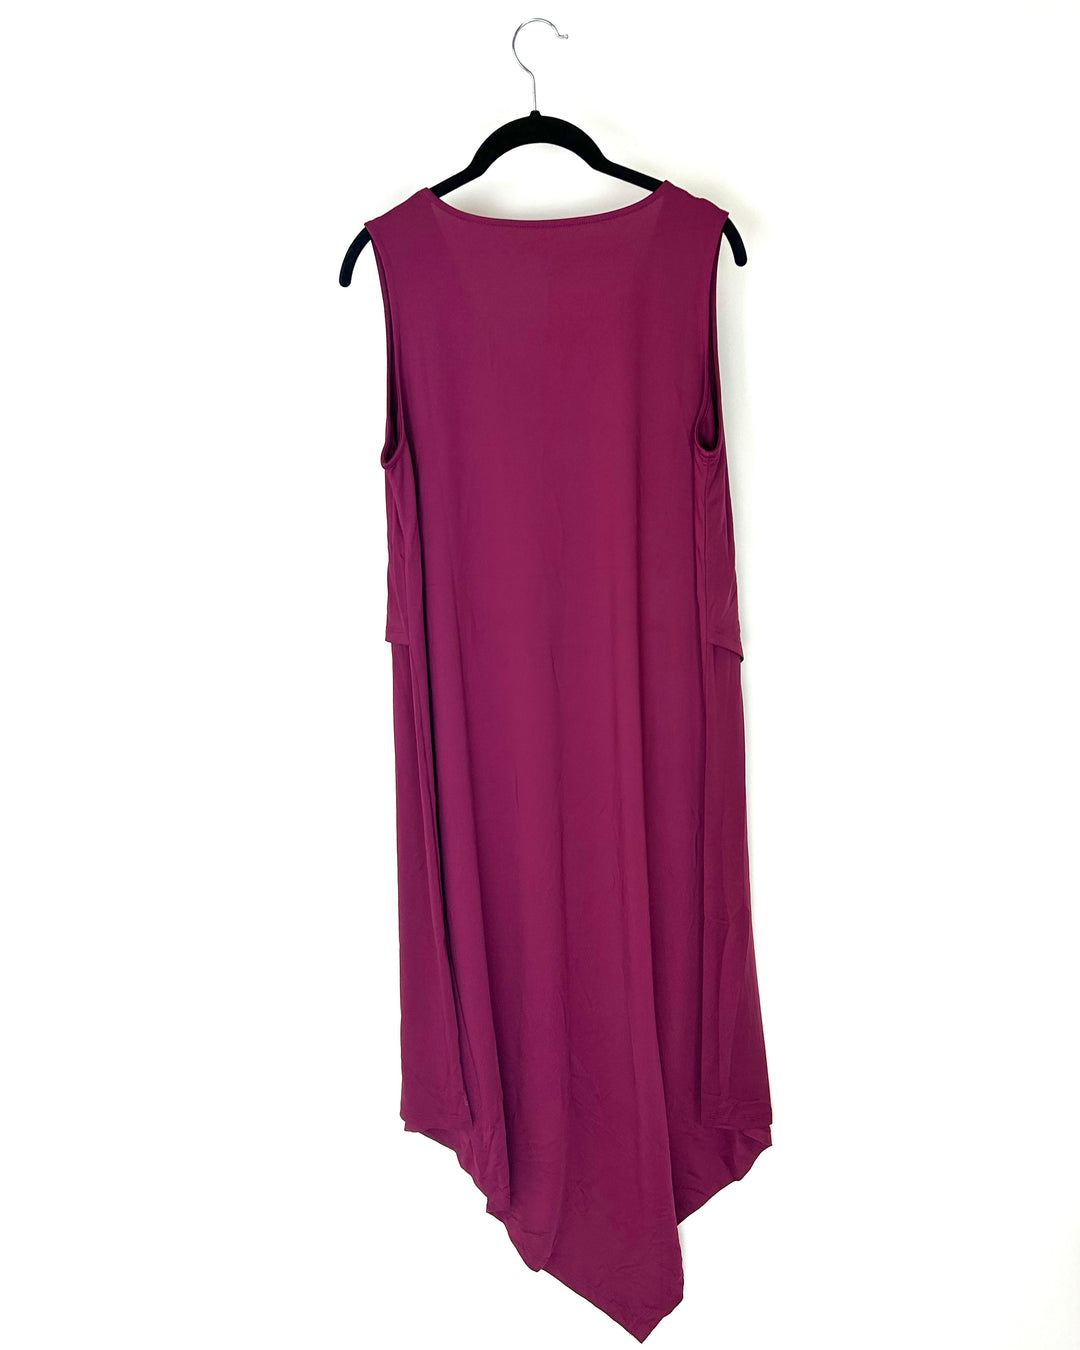 Plum Asymmetrical Dress - Size 10/12